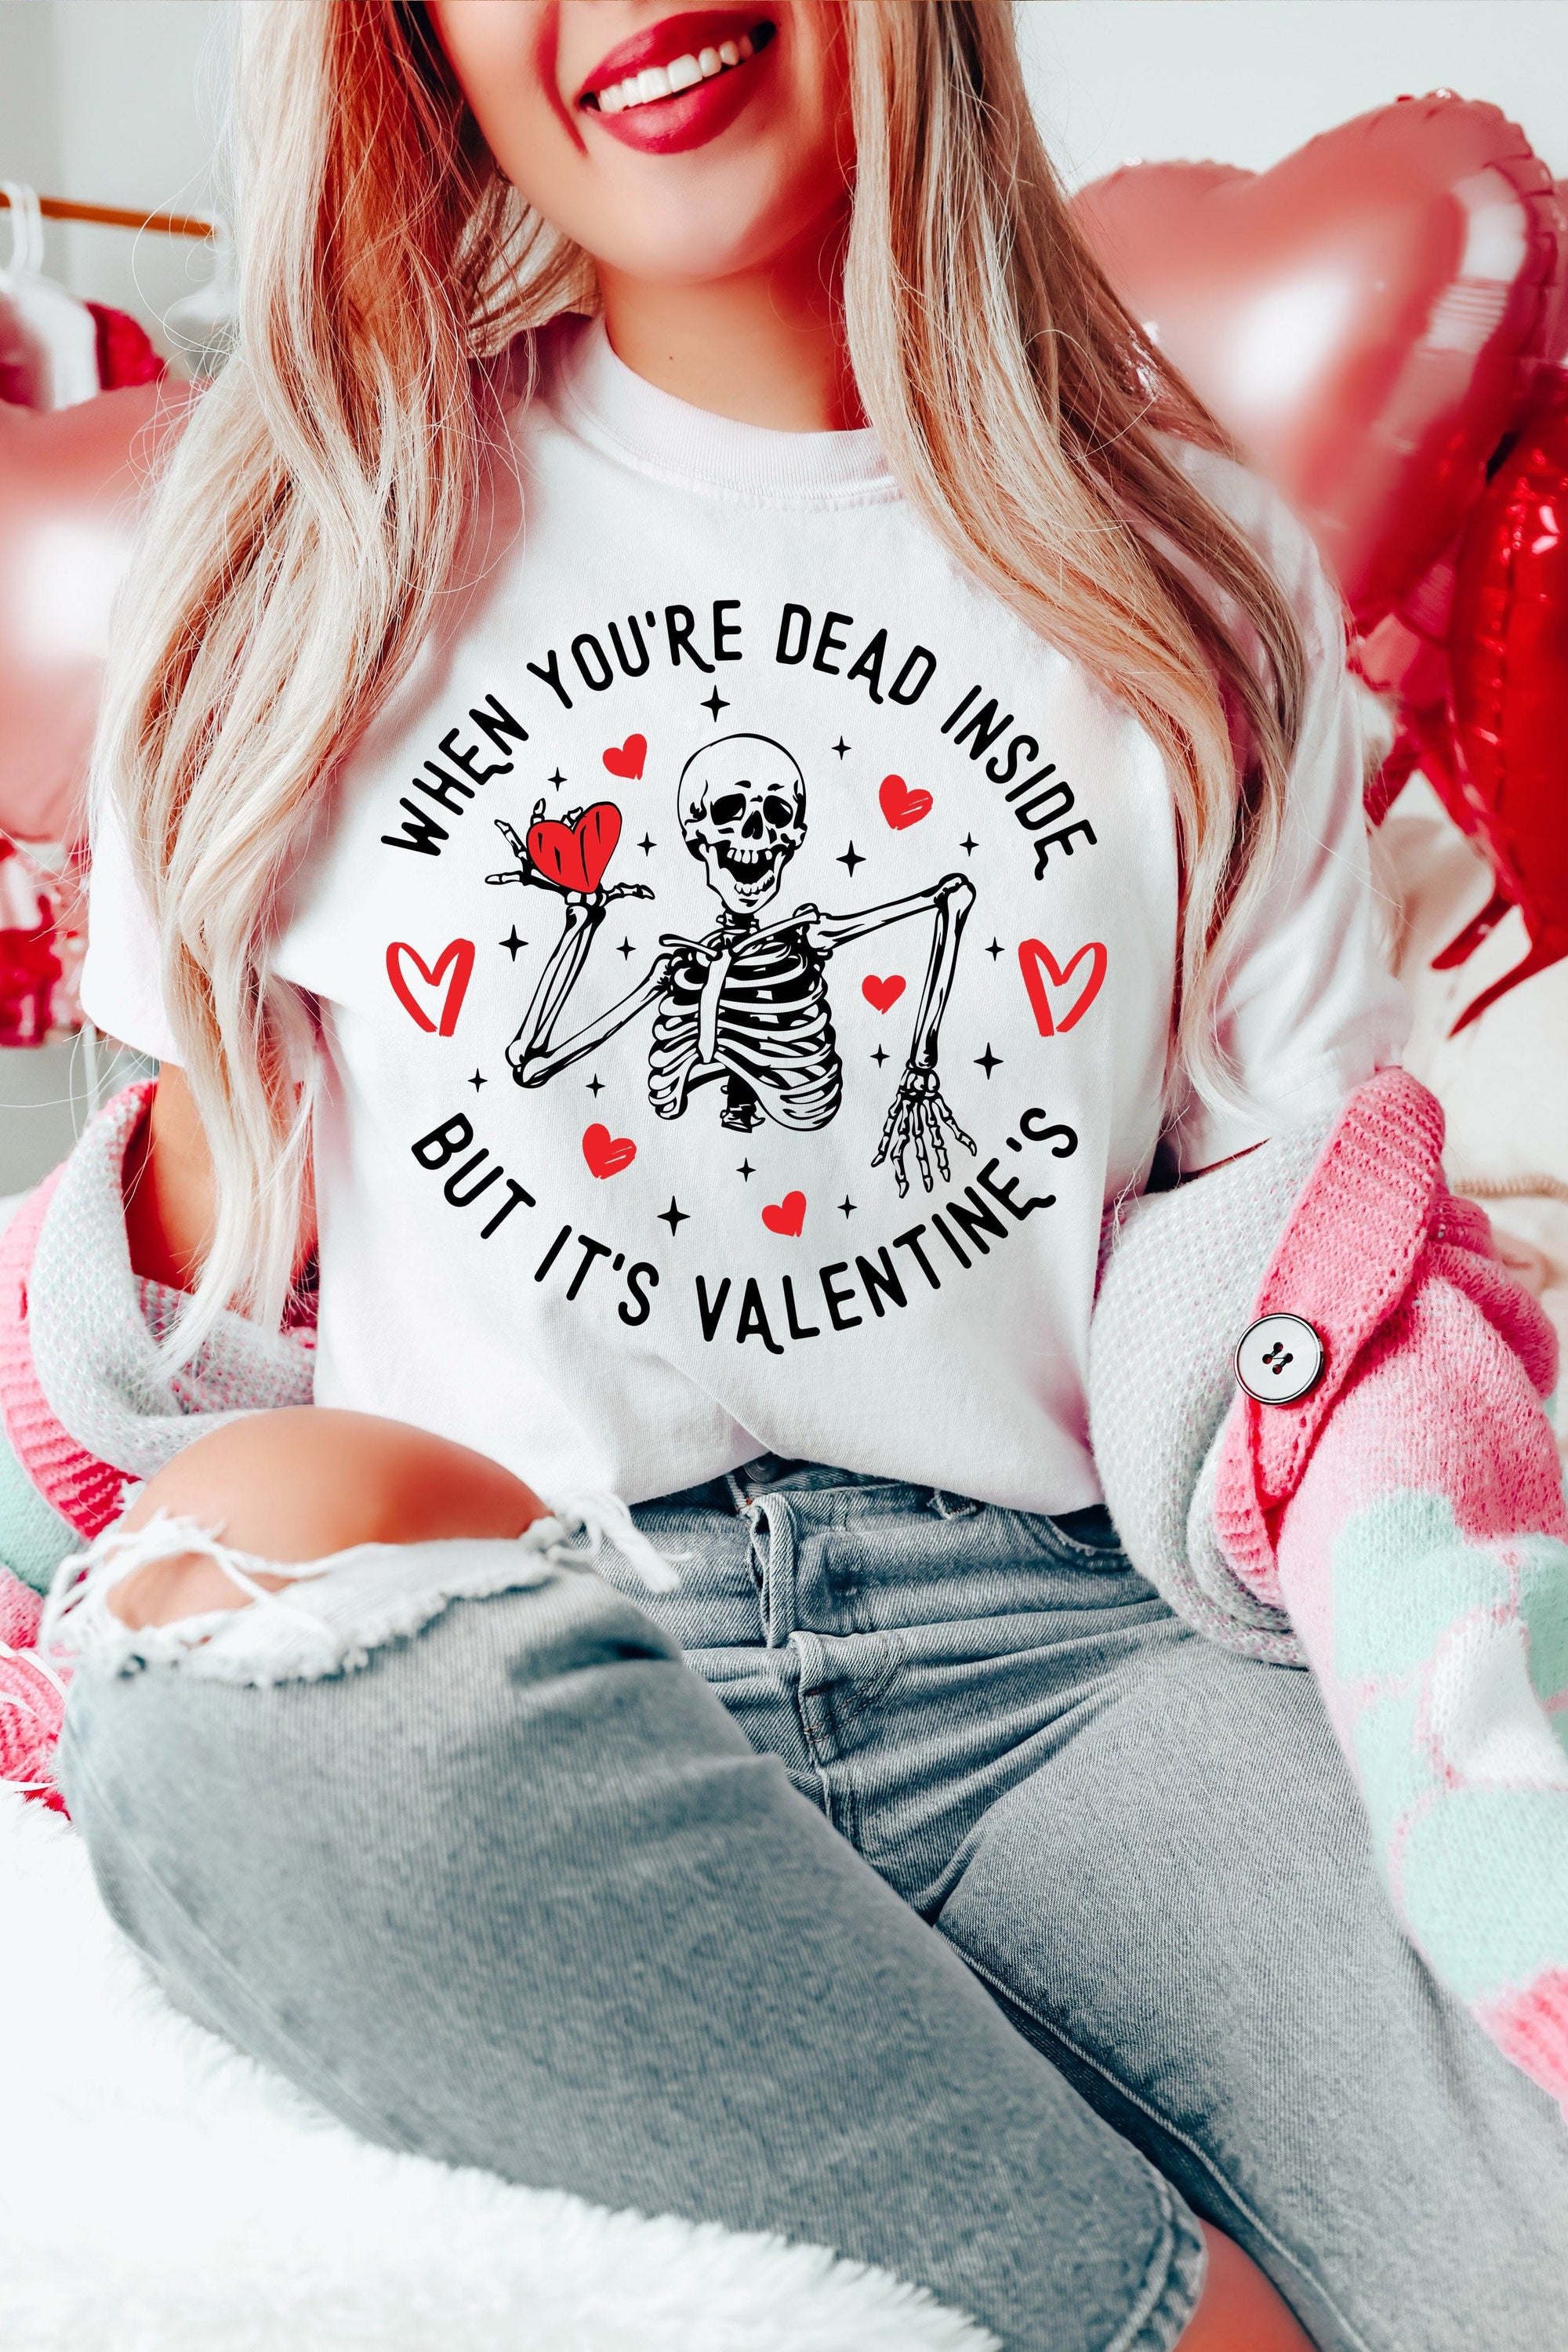 When You're Dead Inside But It's Valentine's T-Shirt